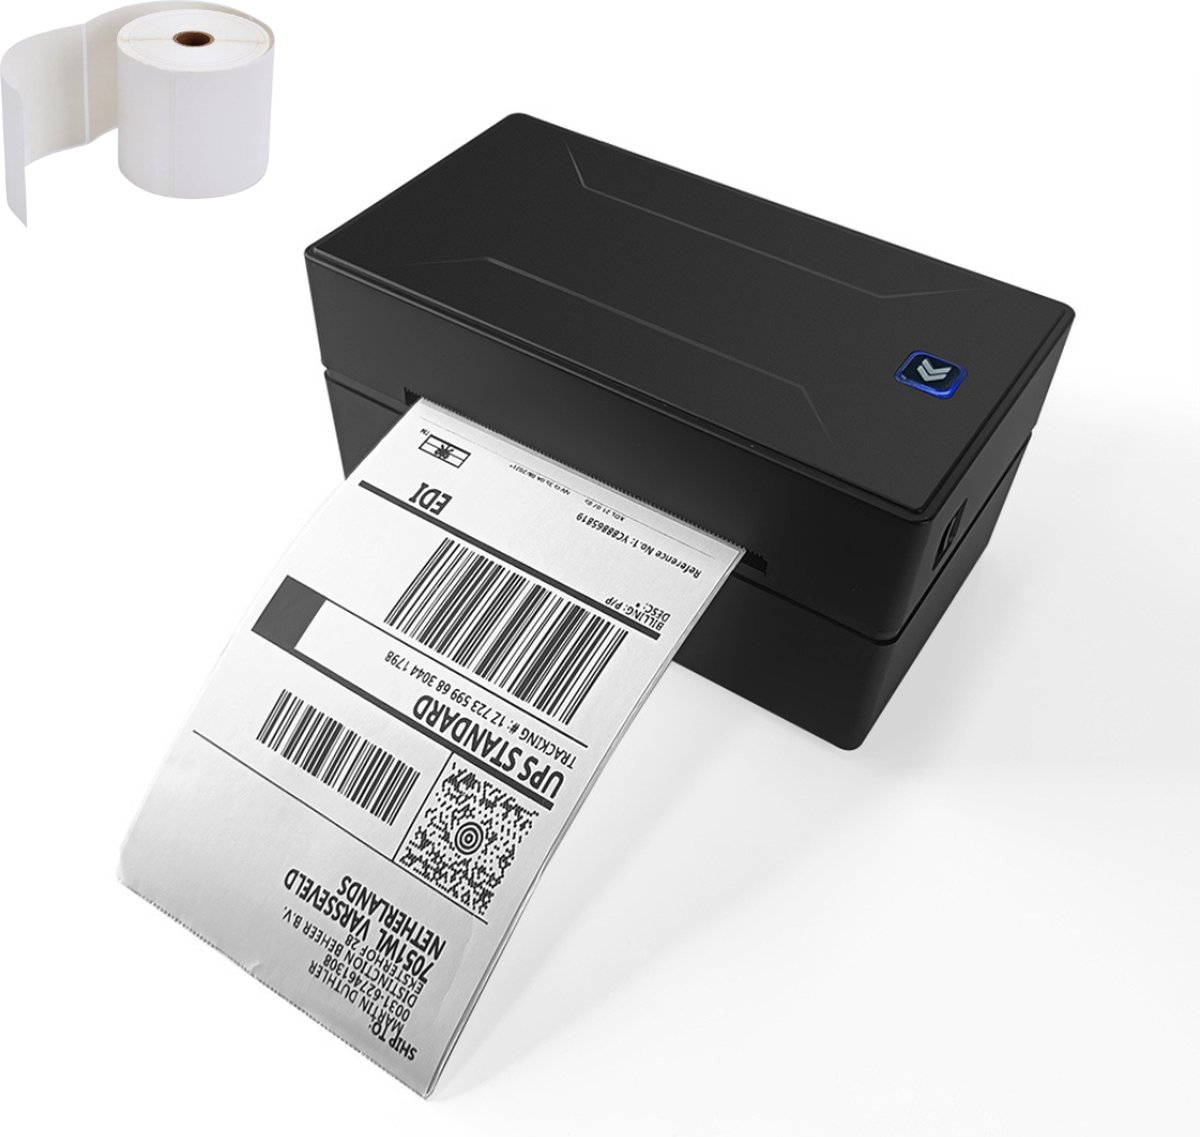 Label Printer + 1 label rol (500 pcs per rol) - Bluetooth - USB verbinding - Bluetooth Thermal Label Printer - Snel Printen - Thuisgebruik - Kantoor Printer - 100 mm x 150 mm Labels - Thermal Label Printer